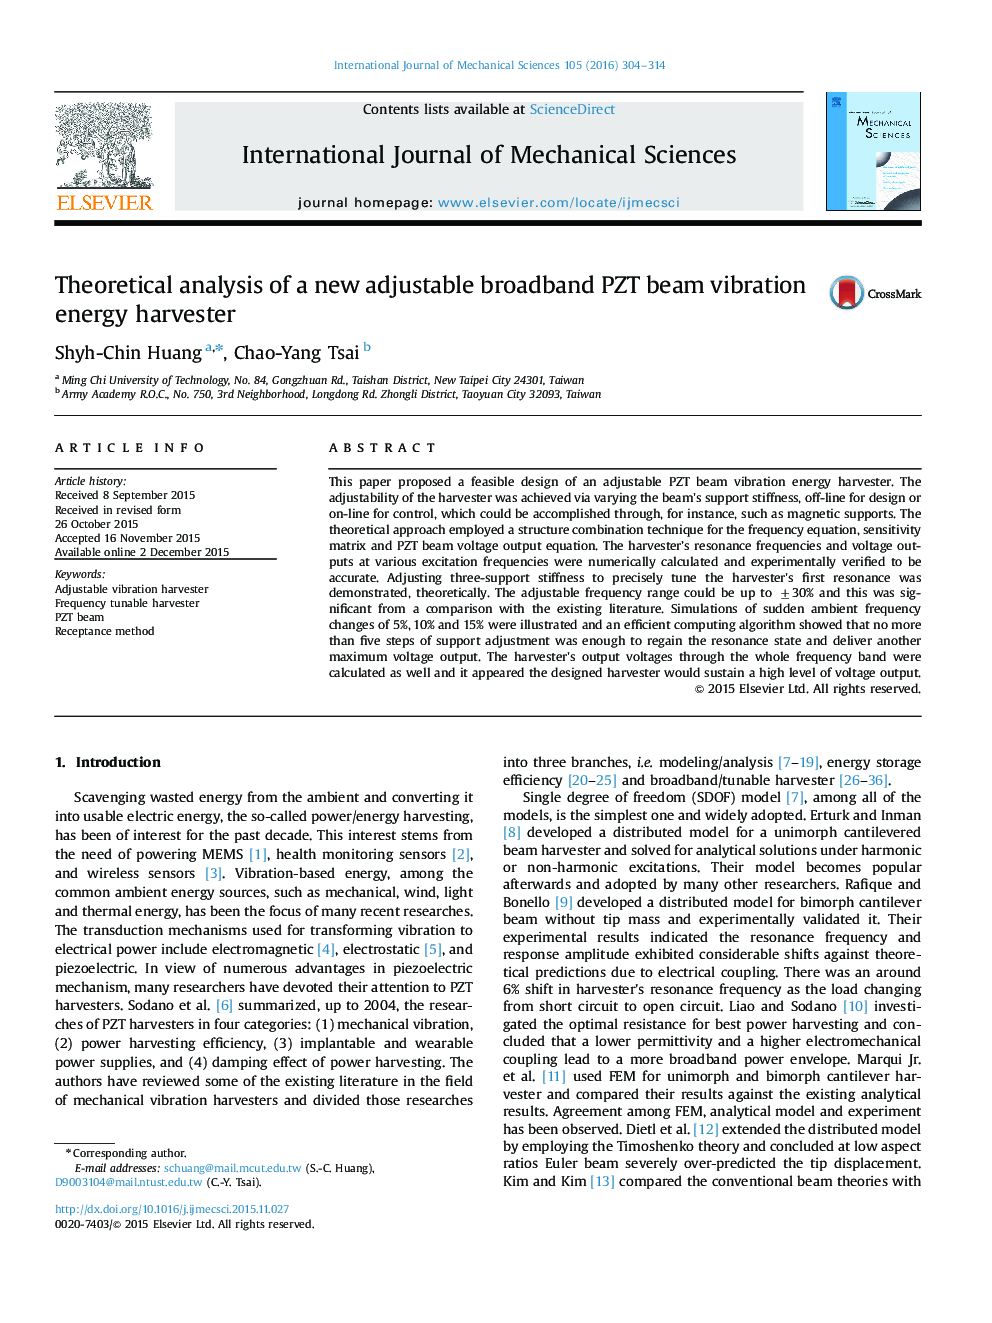 Theoretical analysis of a new adjustable broadband PZT beam vibration energy harvester